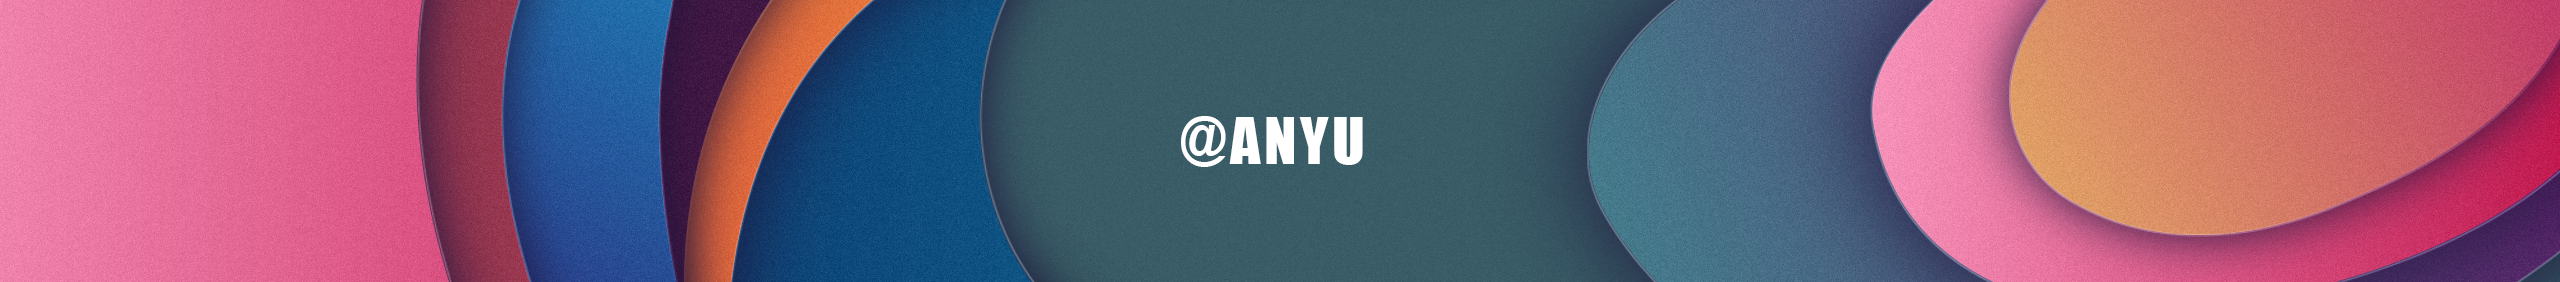 Yu An's profile banner